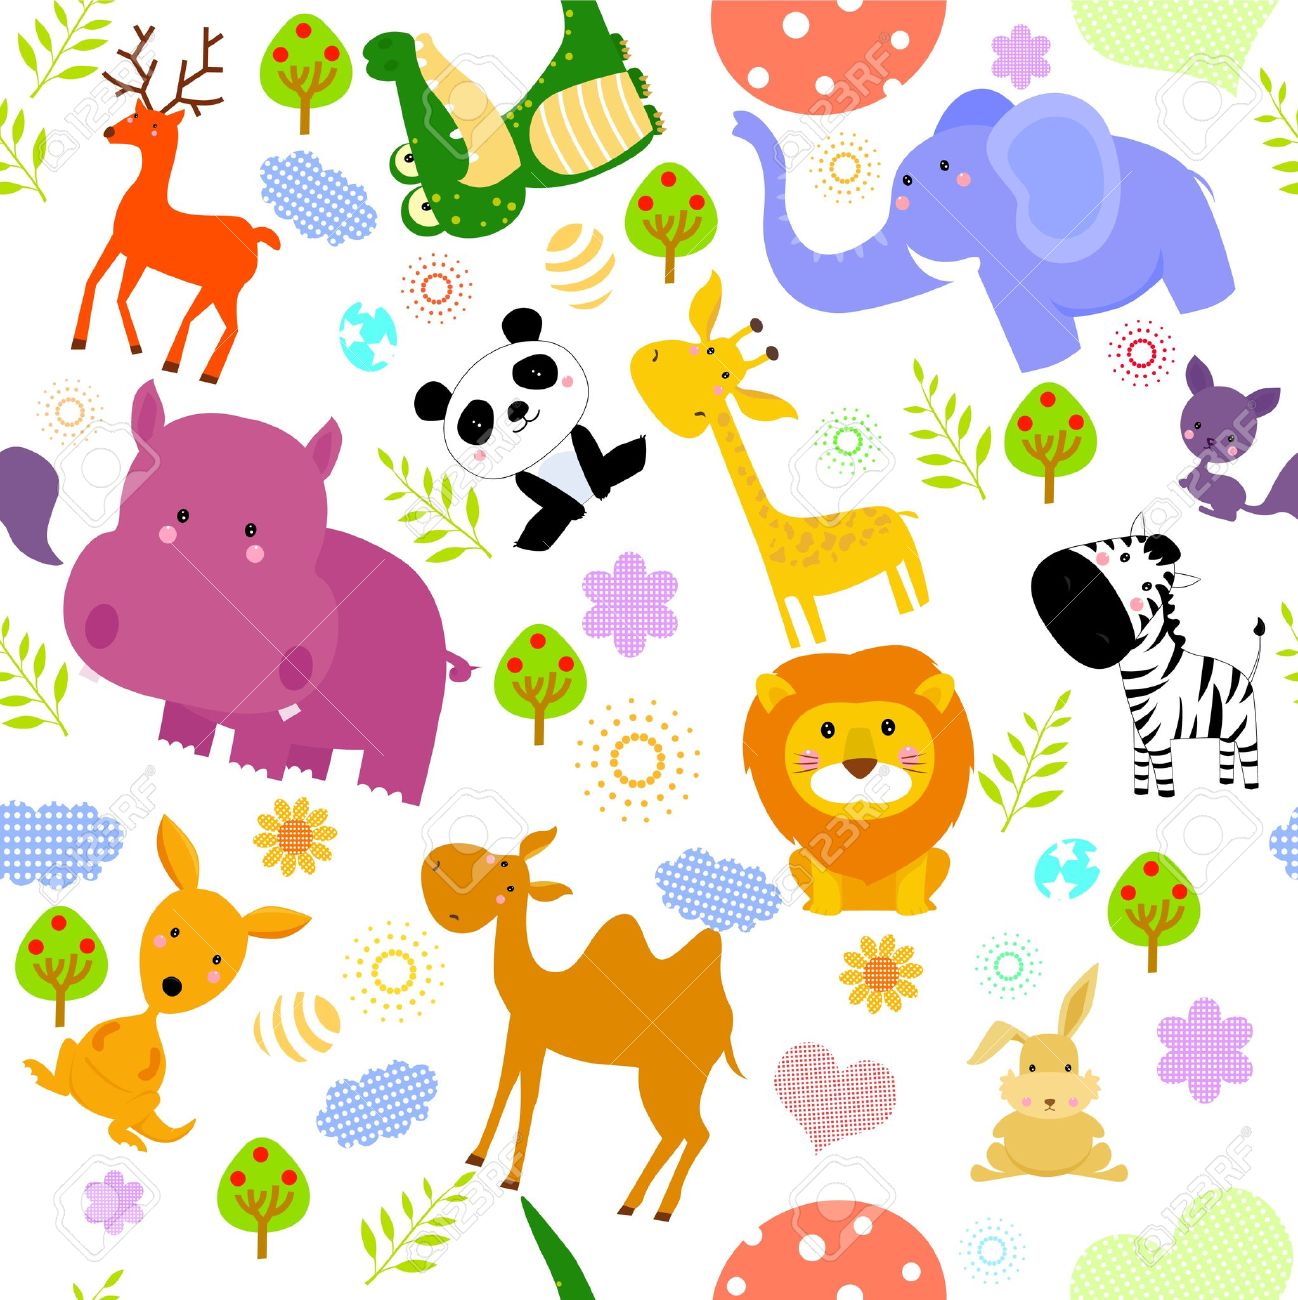 17+] Baby Cartoon Animals Wallpapers - WallpaperSafari